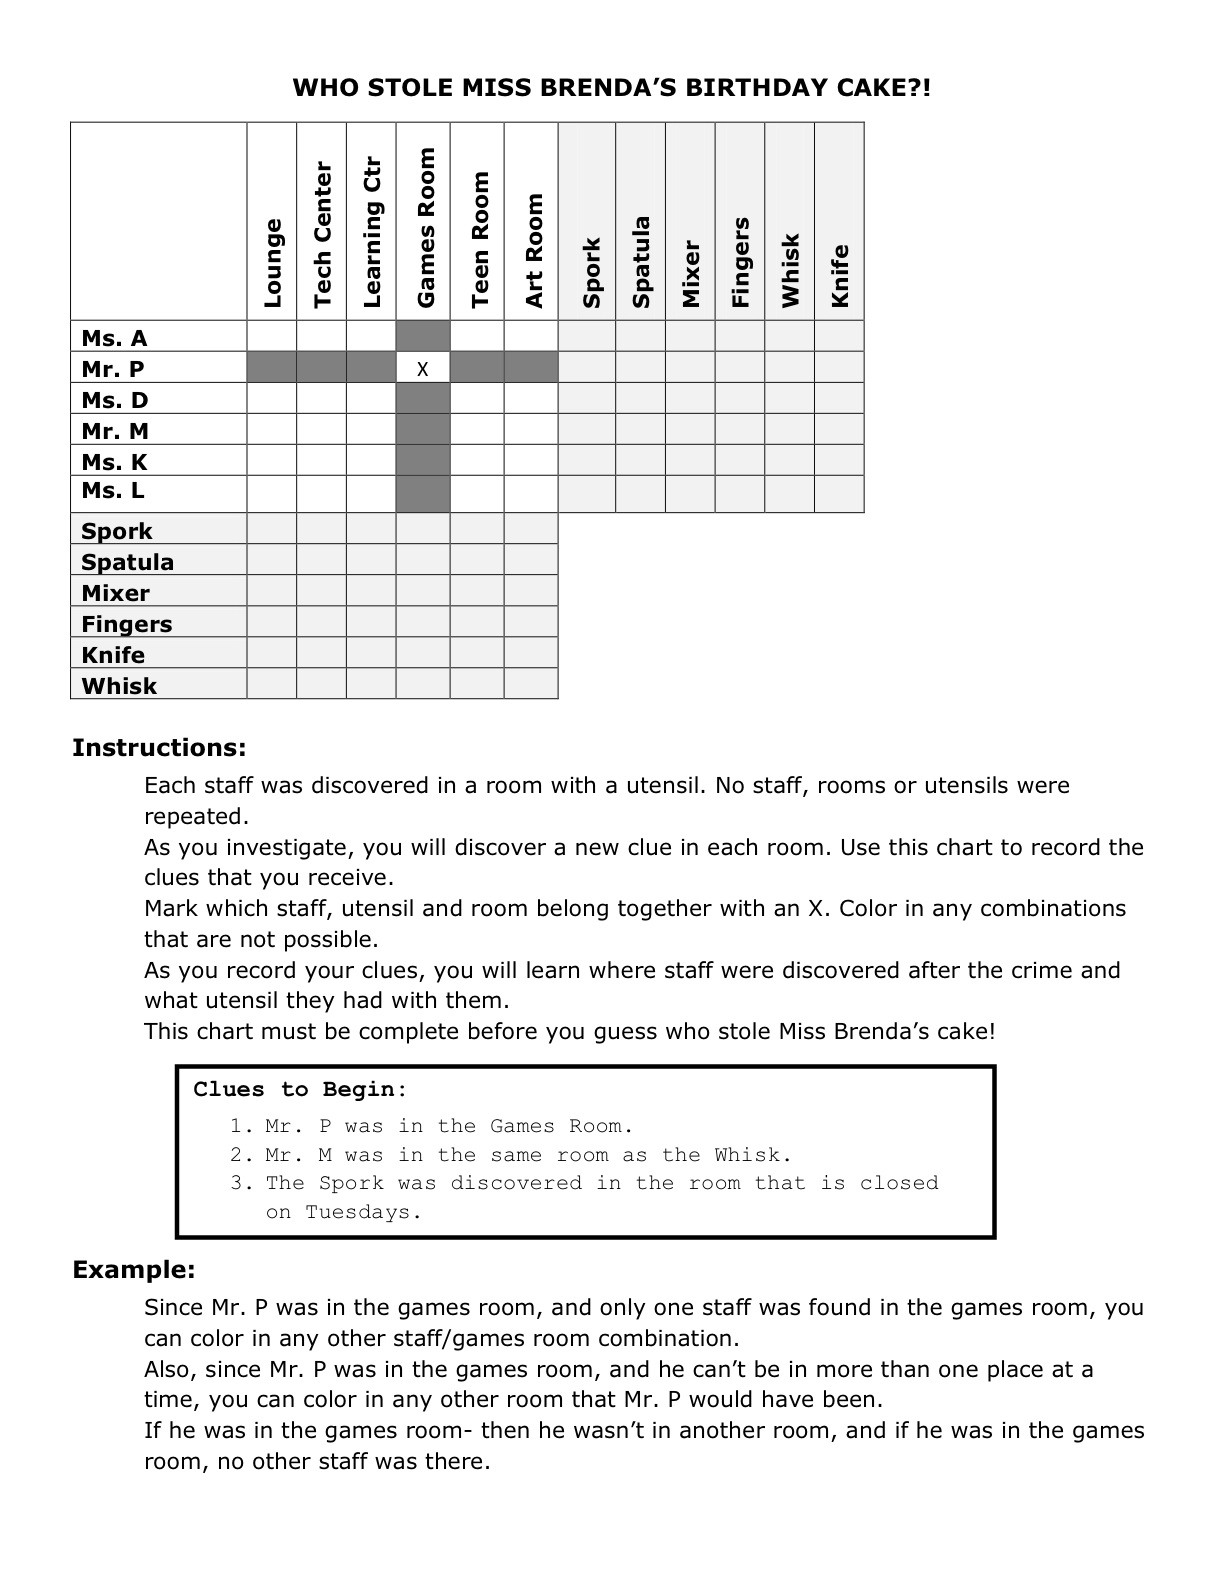 inductive-and-deductive-reasoning-worksheet-new-deductive-reasoning-worksheets-handwriting